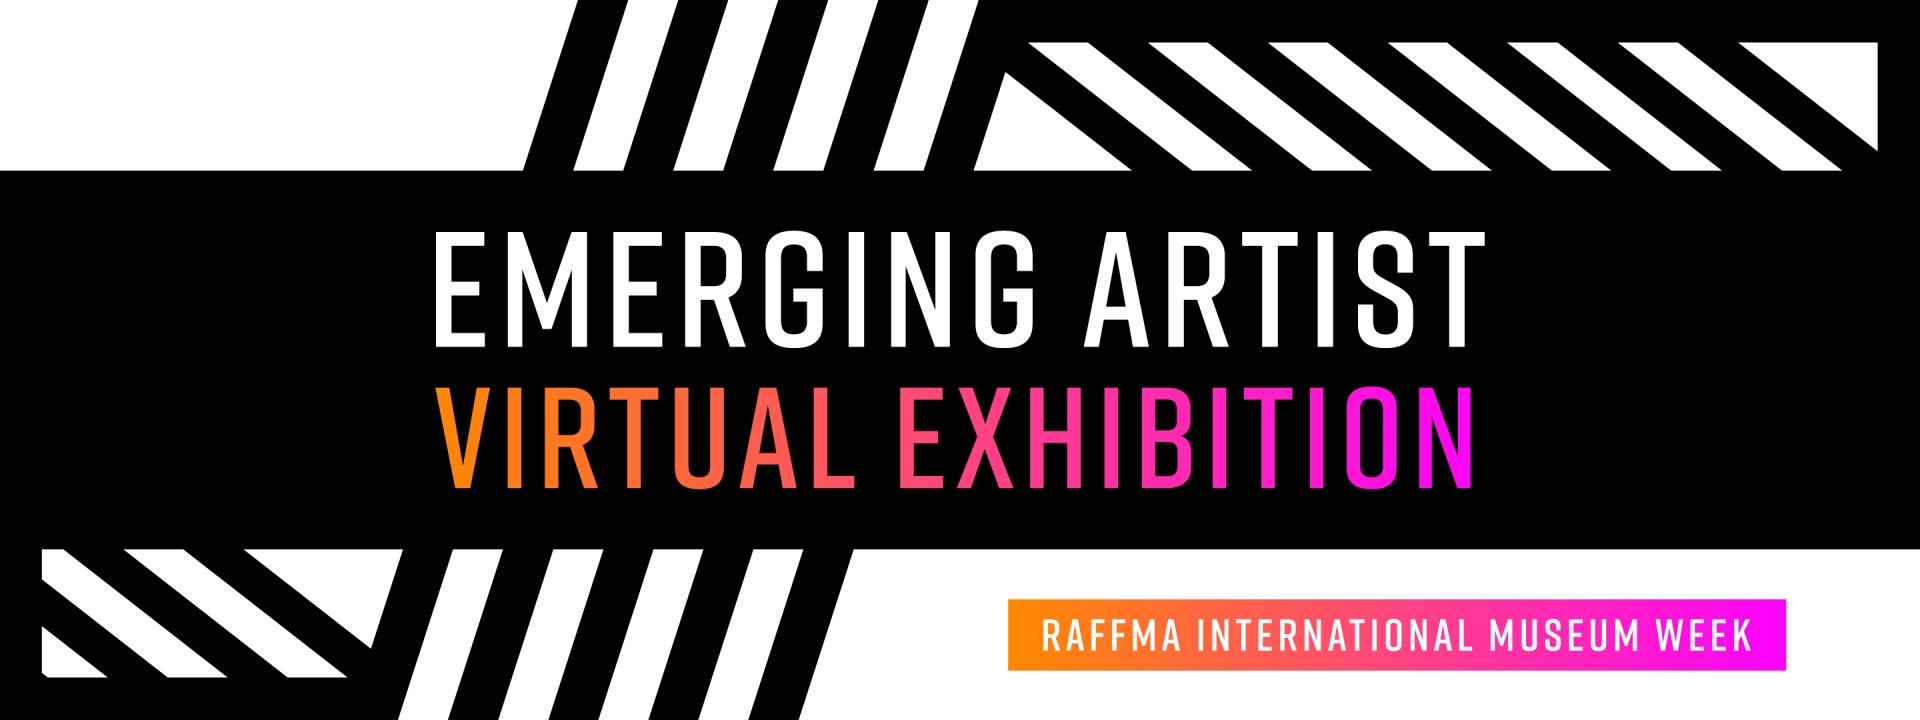 Emerging Artist Virtual Exhibition